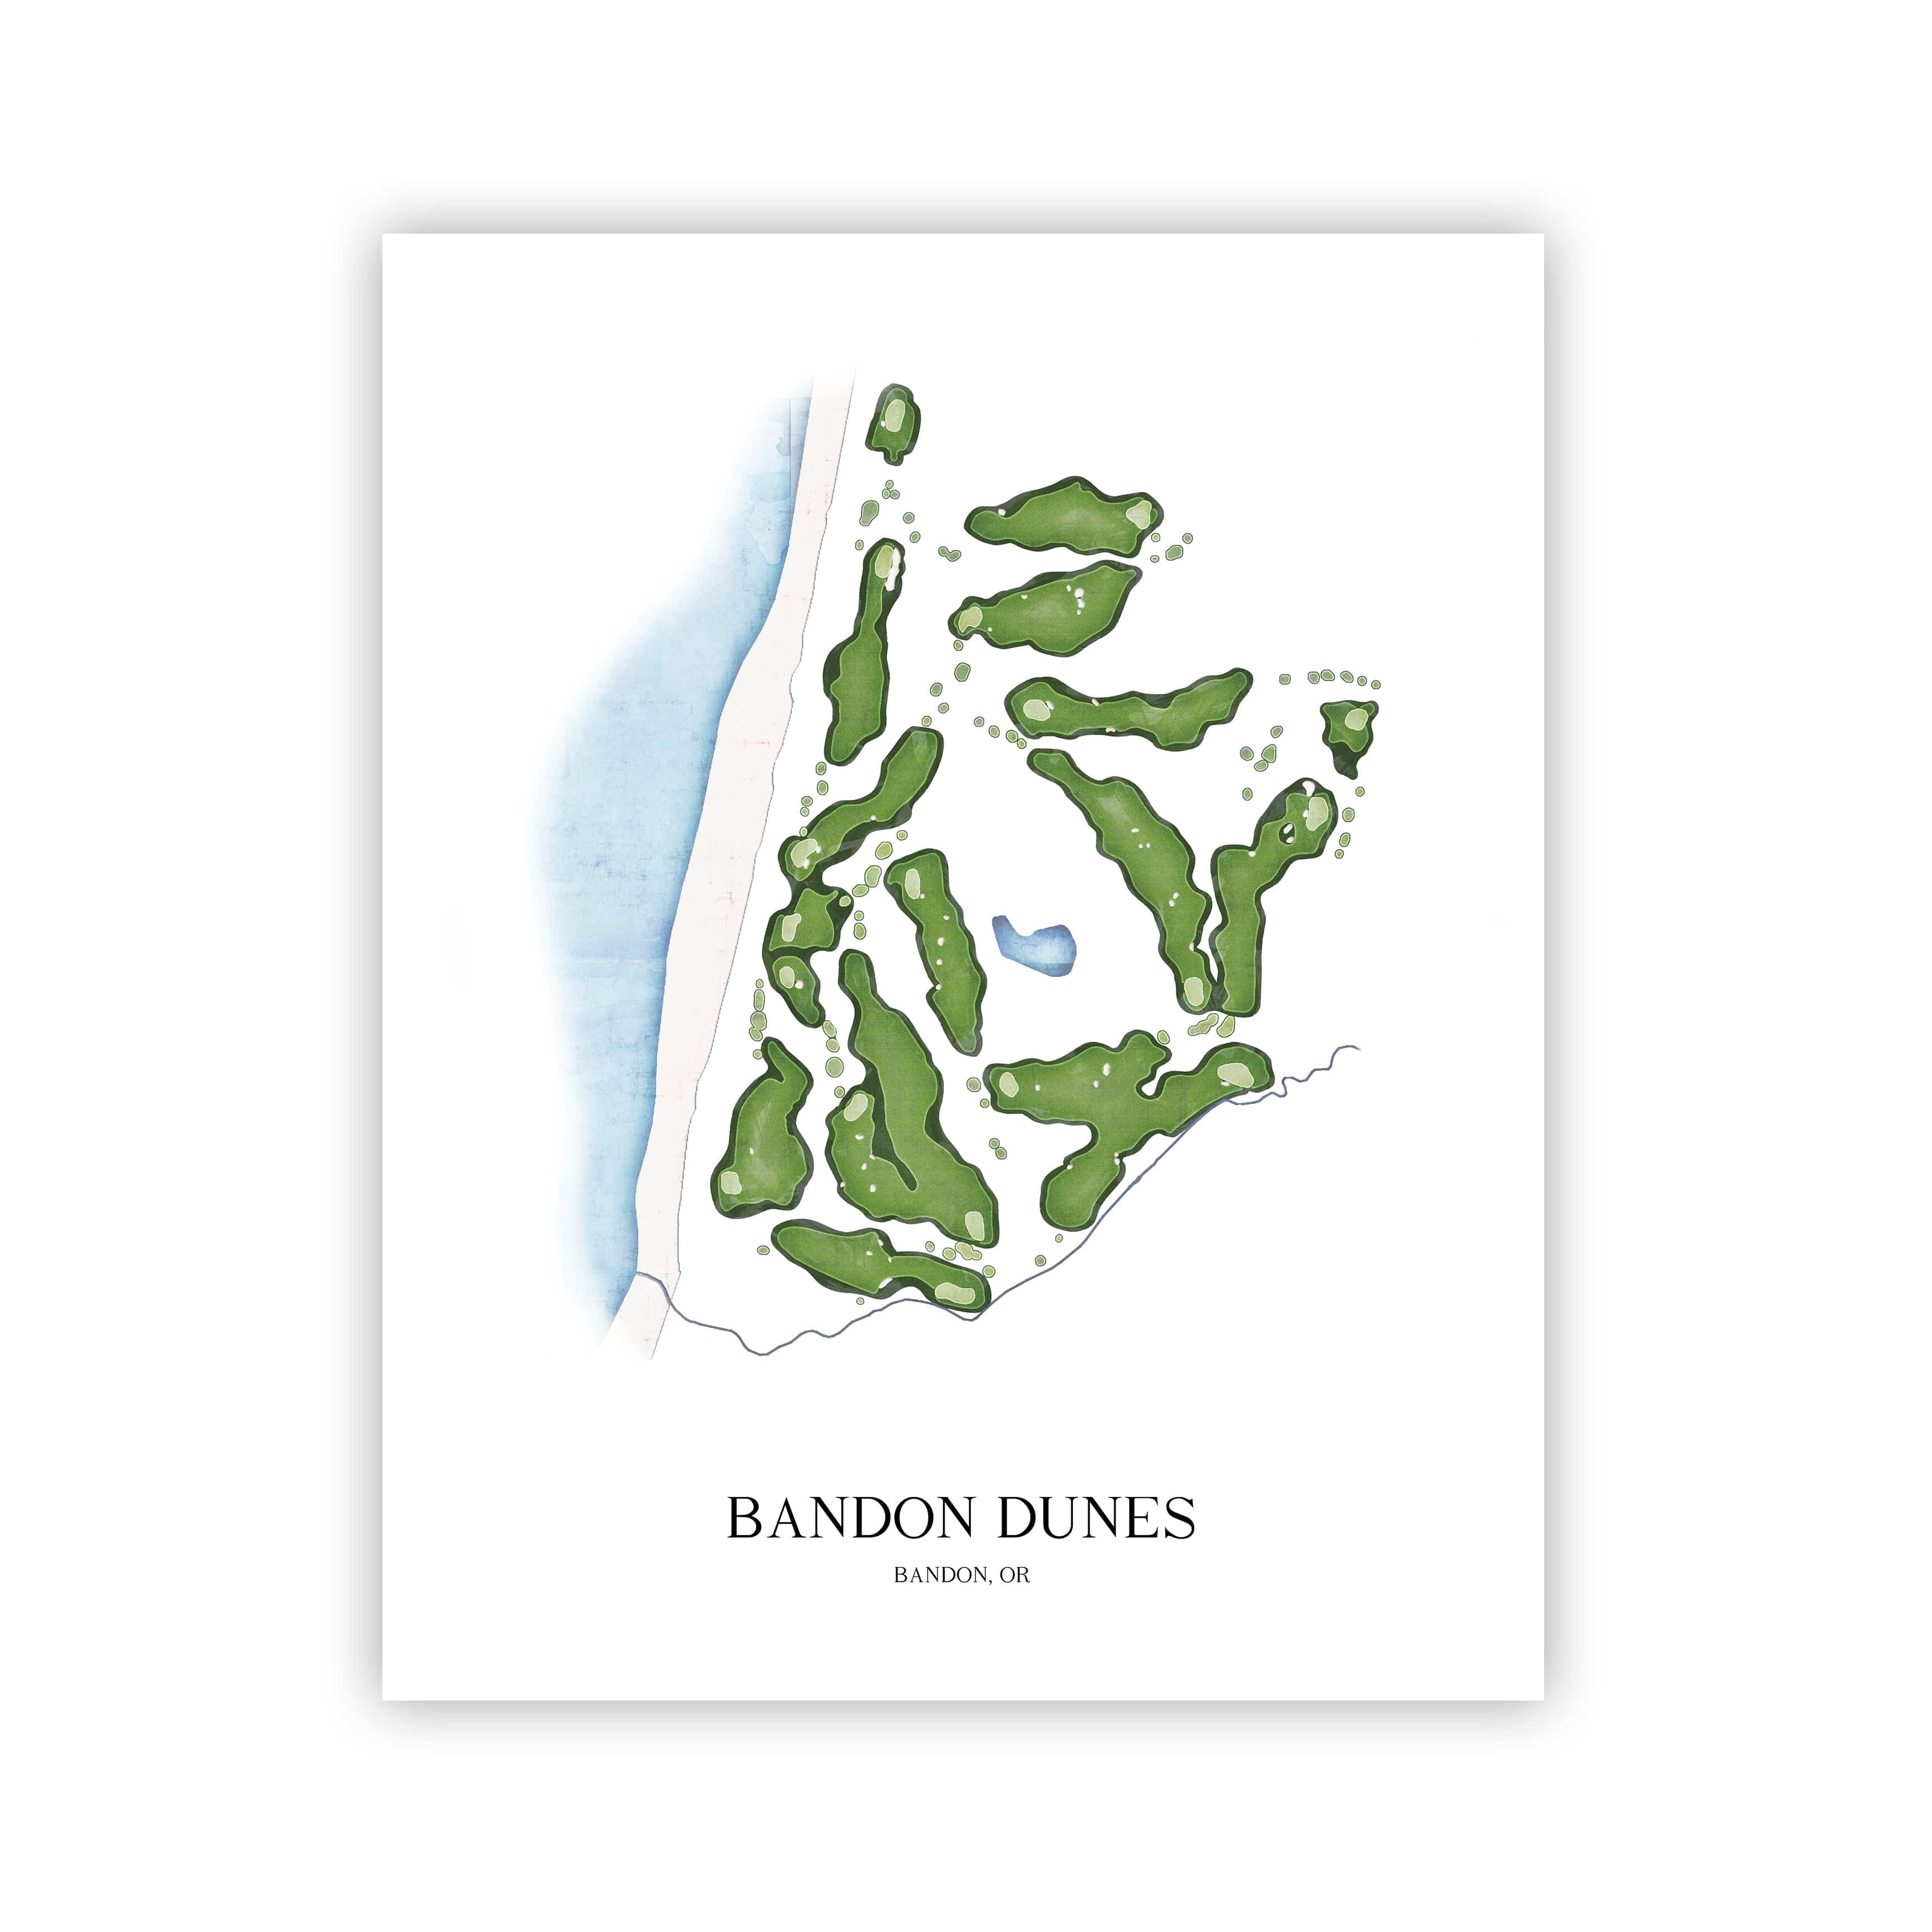 The 19th Hole Golf Shop - Golf Course Prints -  8" x 10" / No Frame Bandon Dunes Golf Course Map